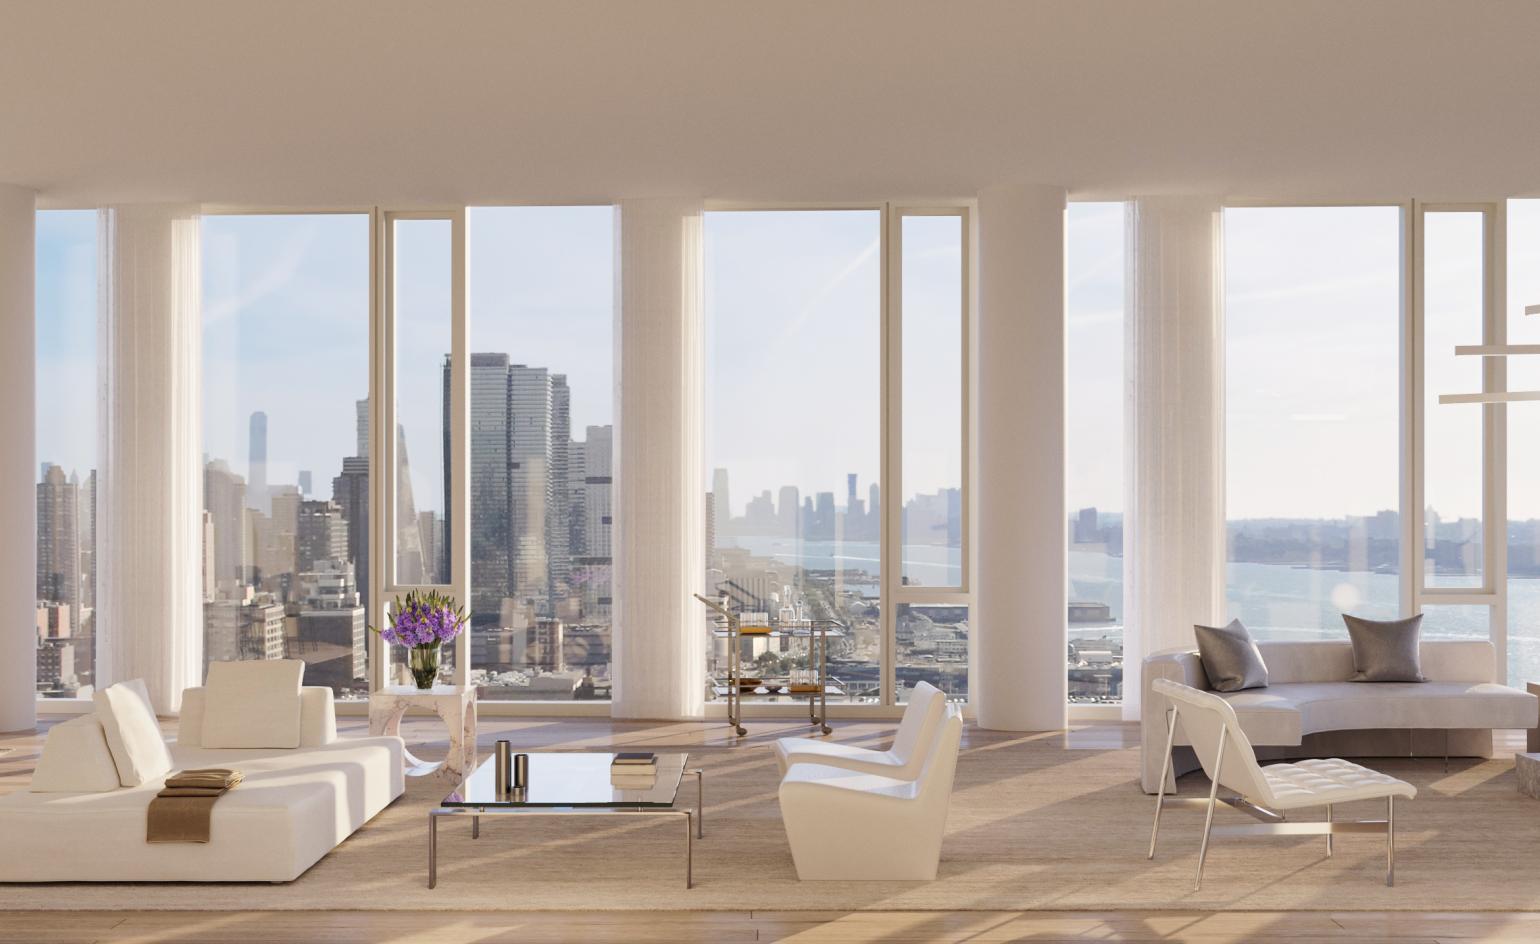 New York City’s latest crop of luxury residential developments-9